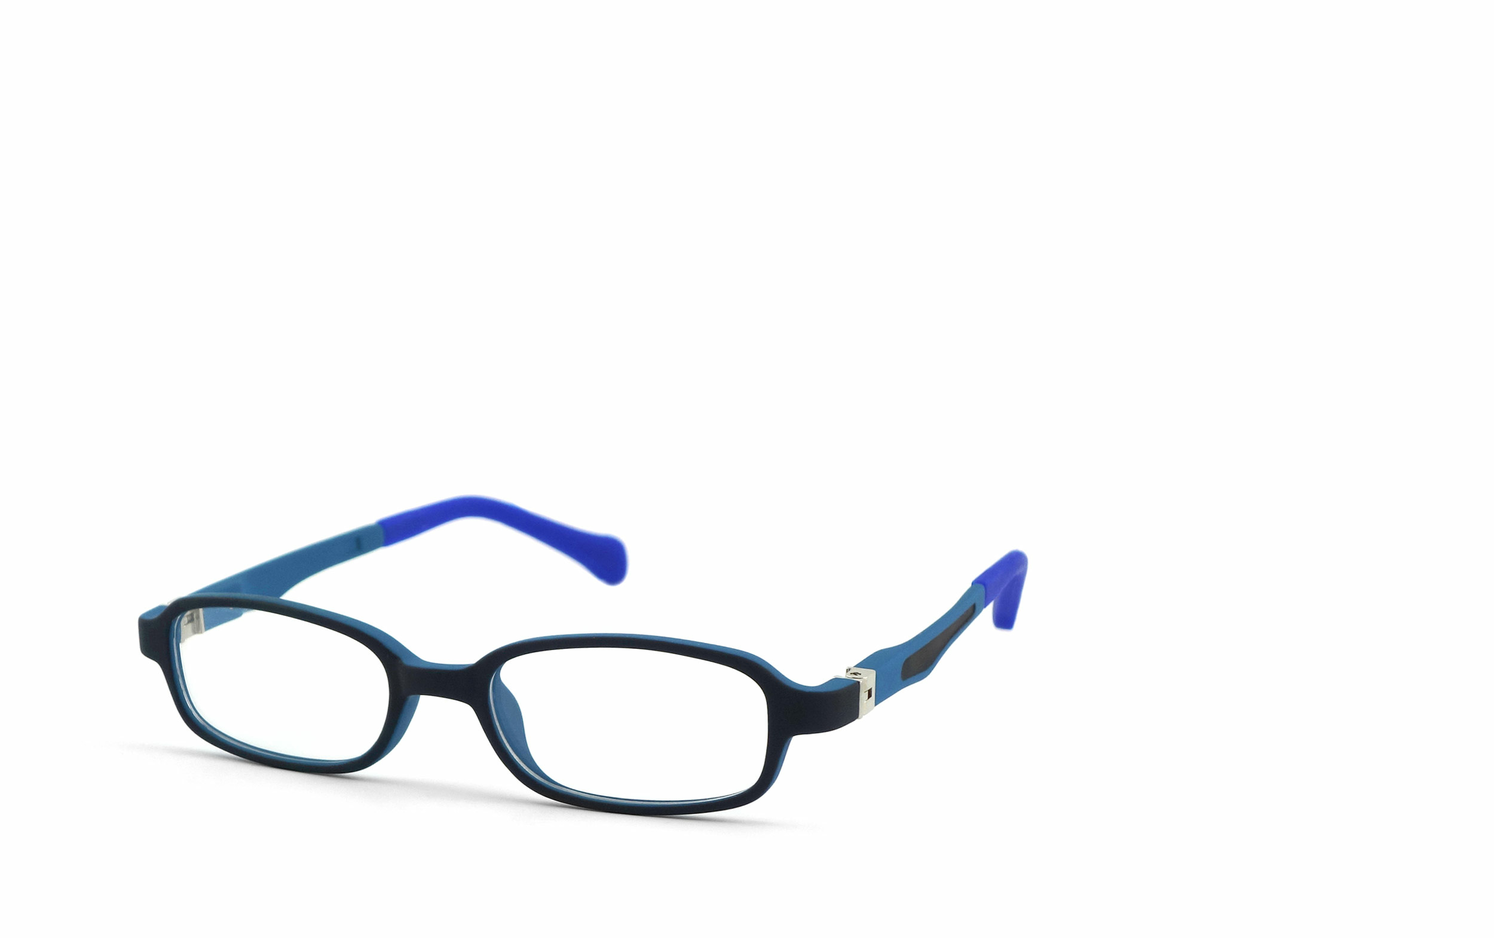 FRICKO kids & teens eyewear | Kinderbrille 002 blau  Kinderbrille, Brille, Brillengestell, Brillenfassung, Korrekturbrille, Korrekturfassung